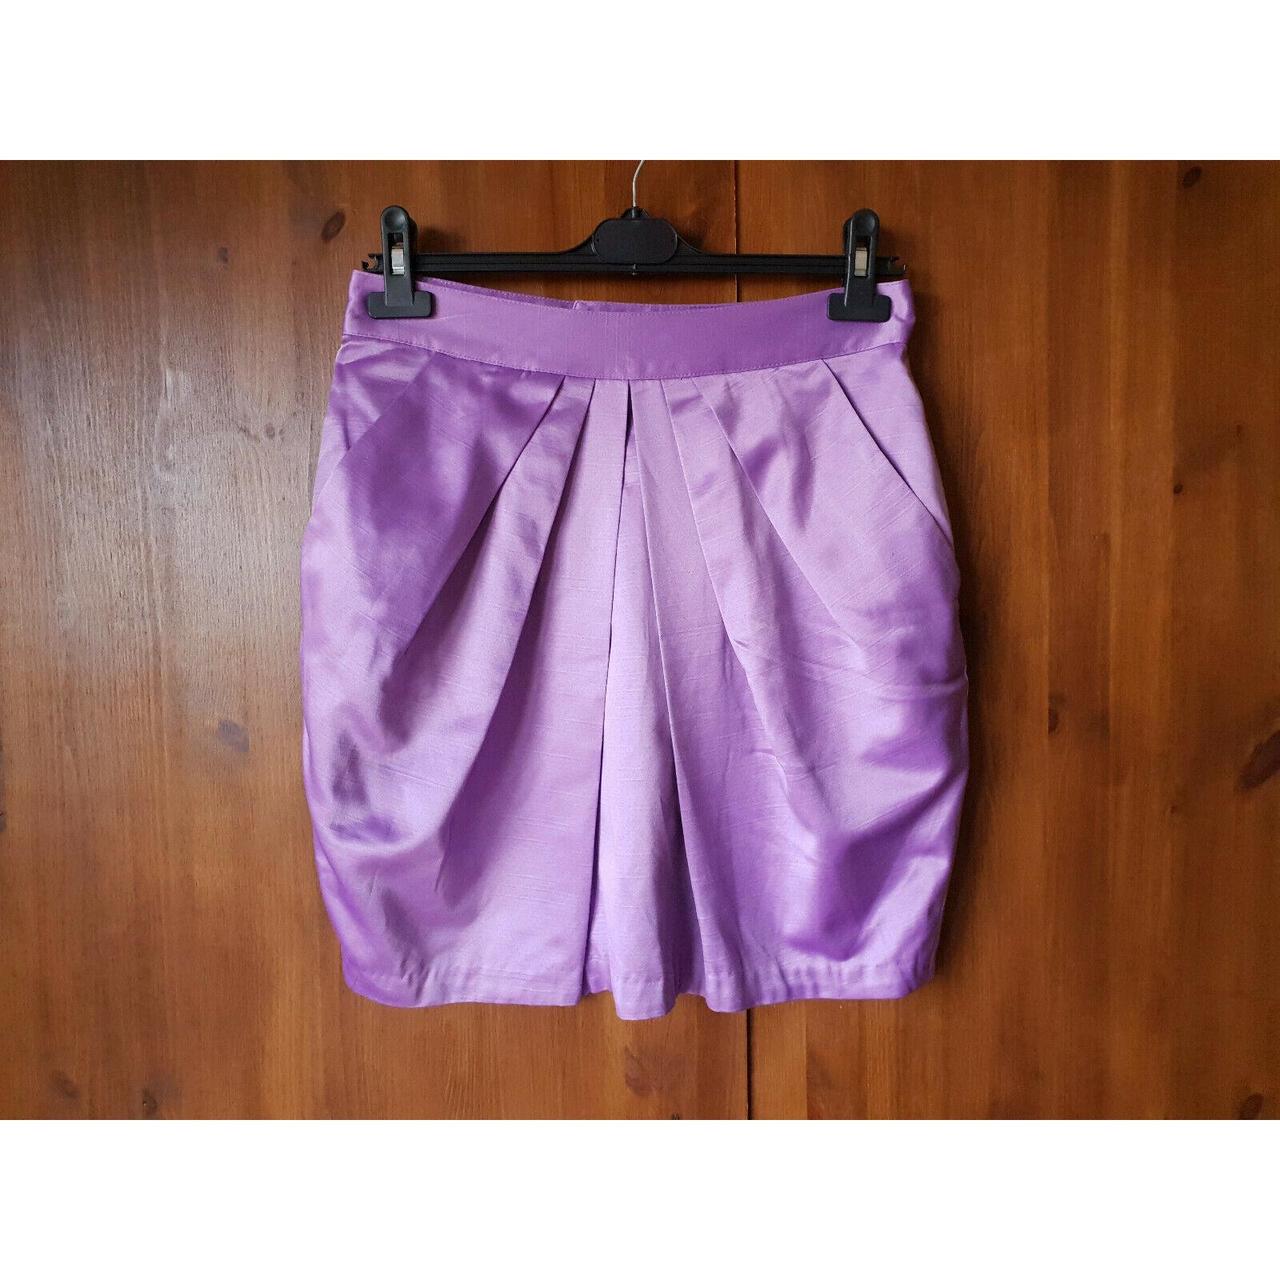 purple skirt m&s